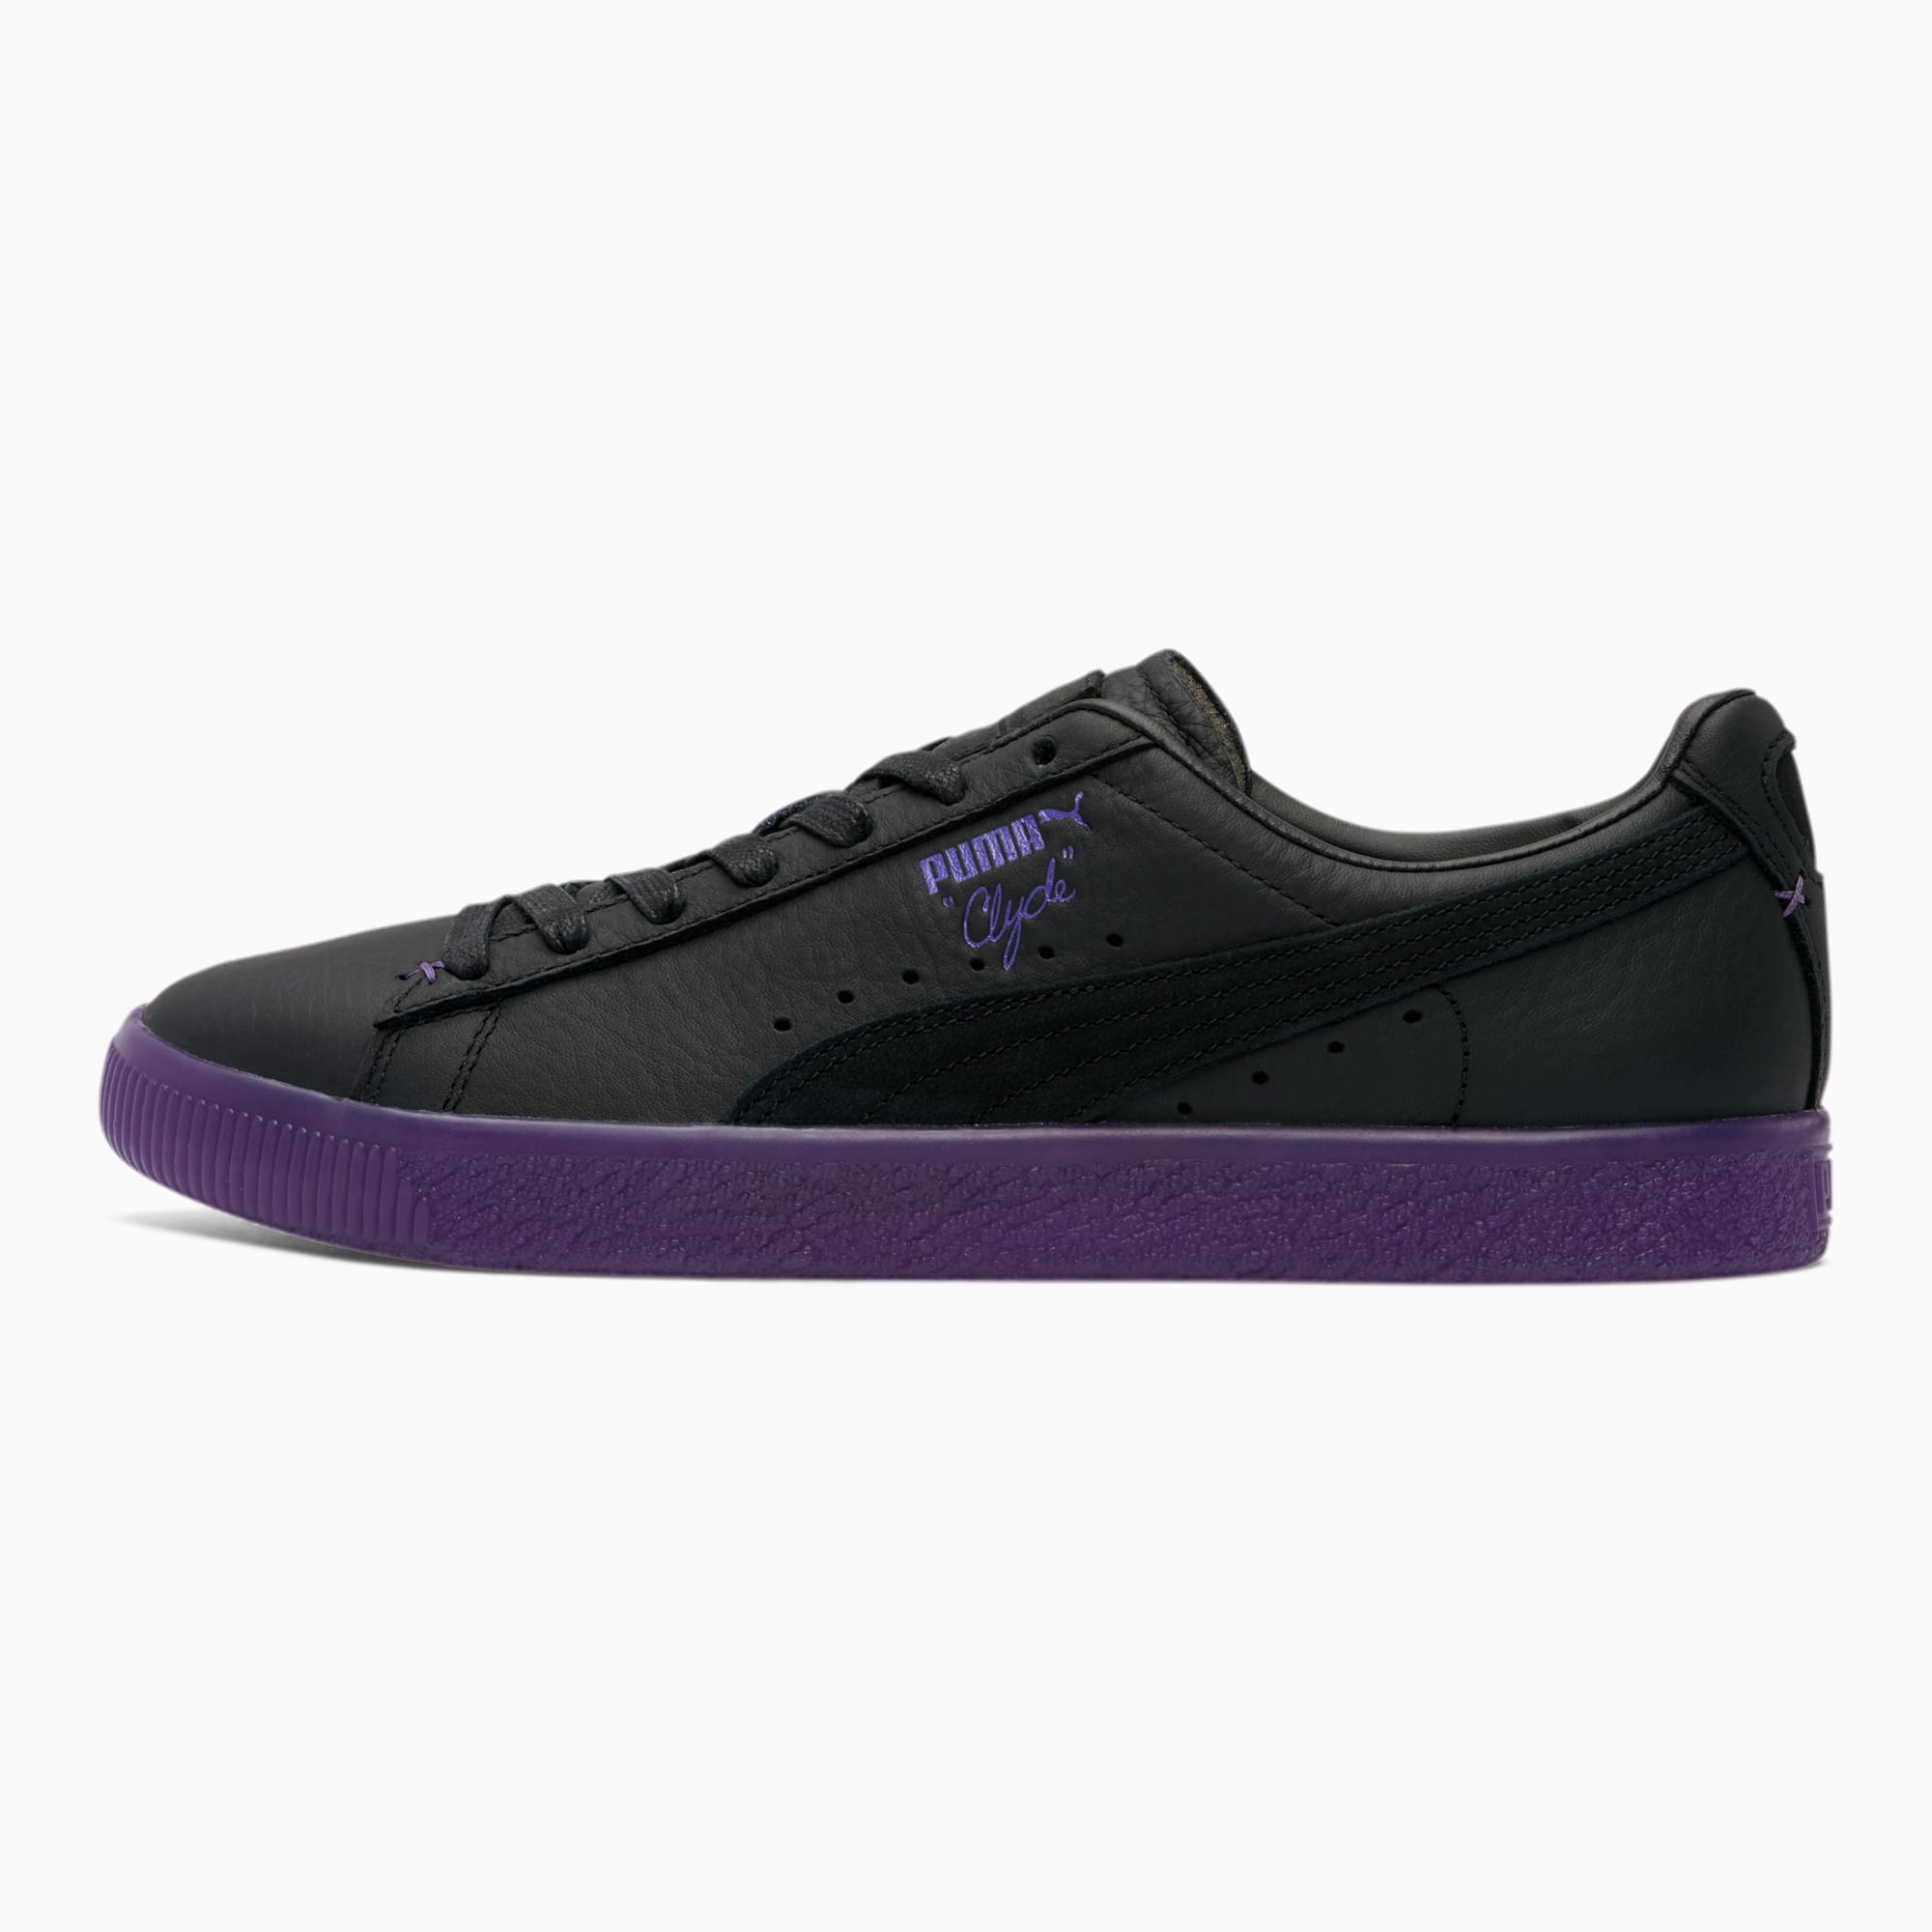 puma clyde court black purple